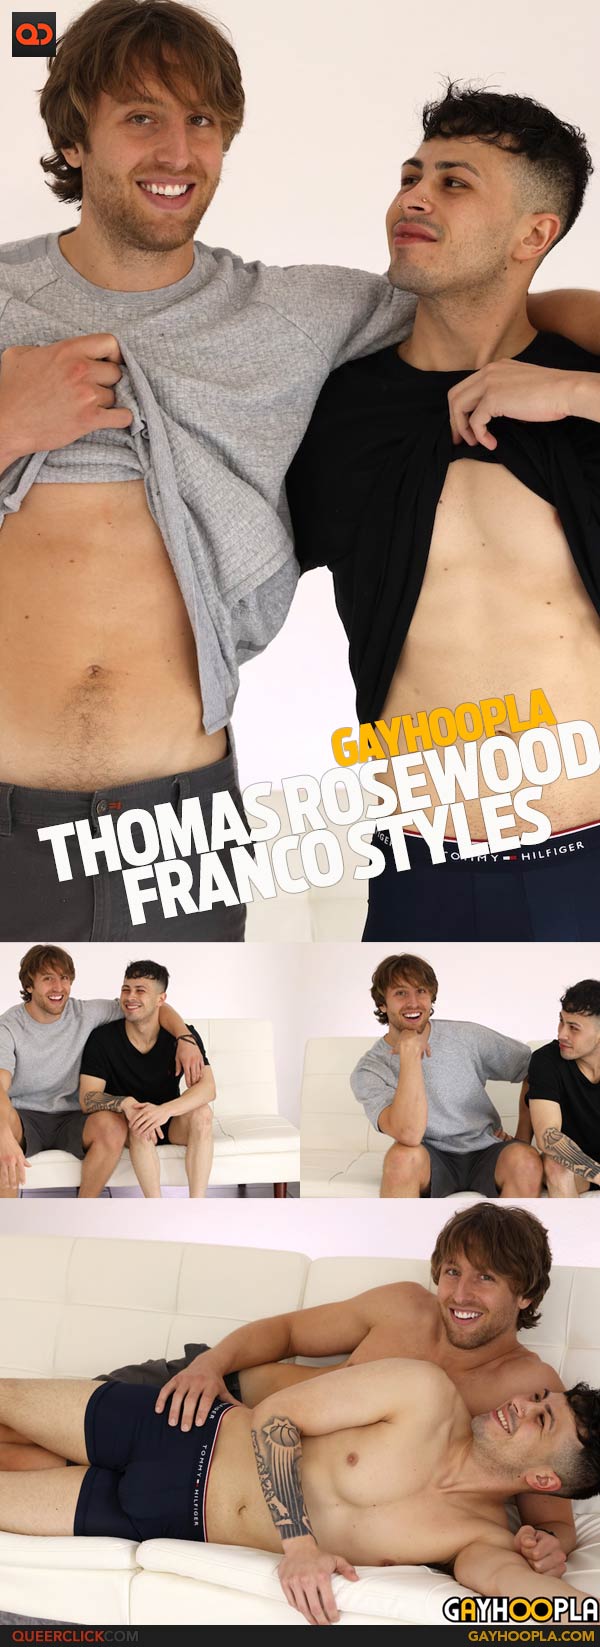 GayHoopla: Thomas Rosewood and Franco Styles